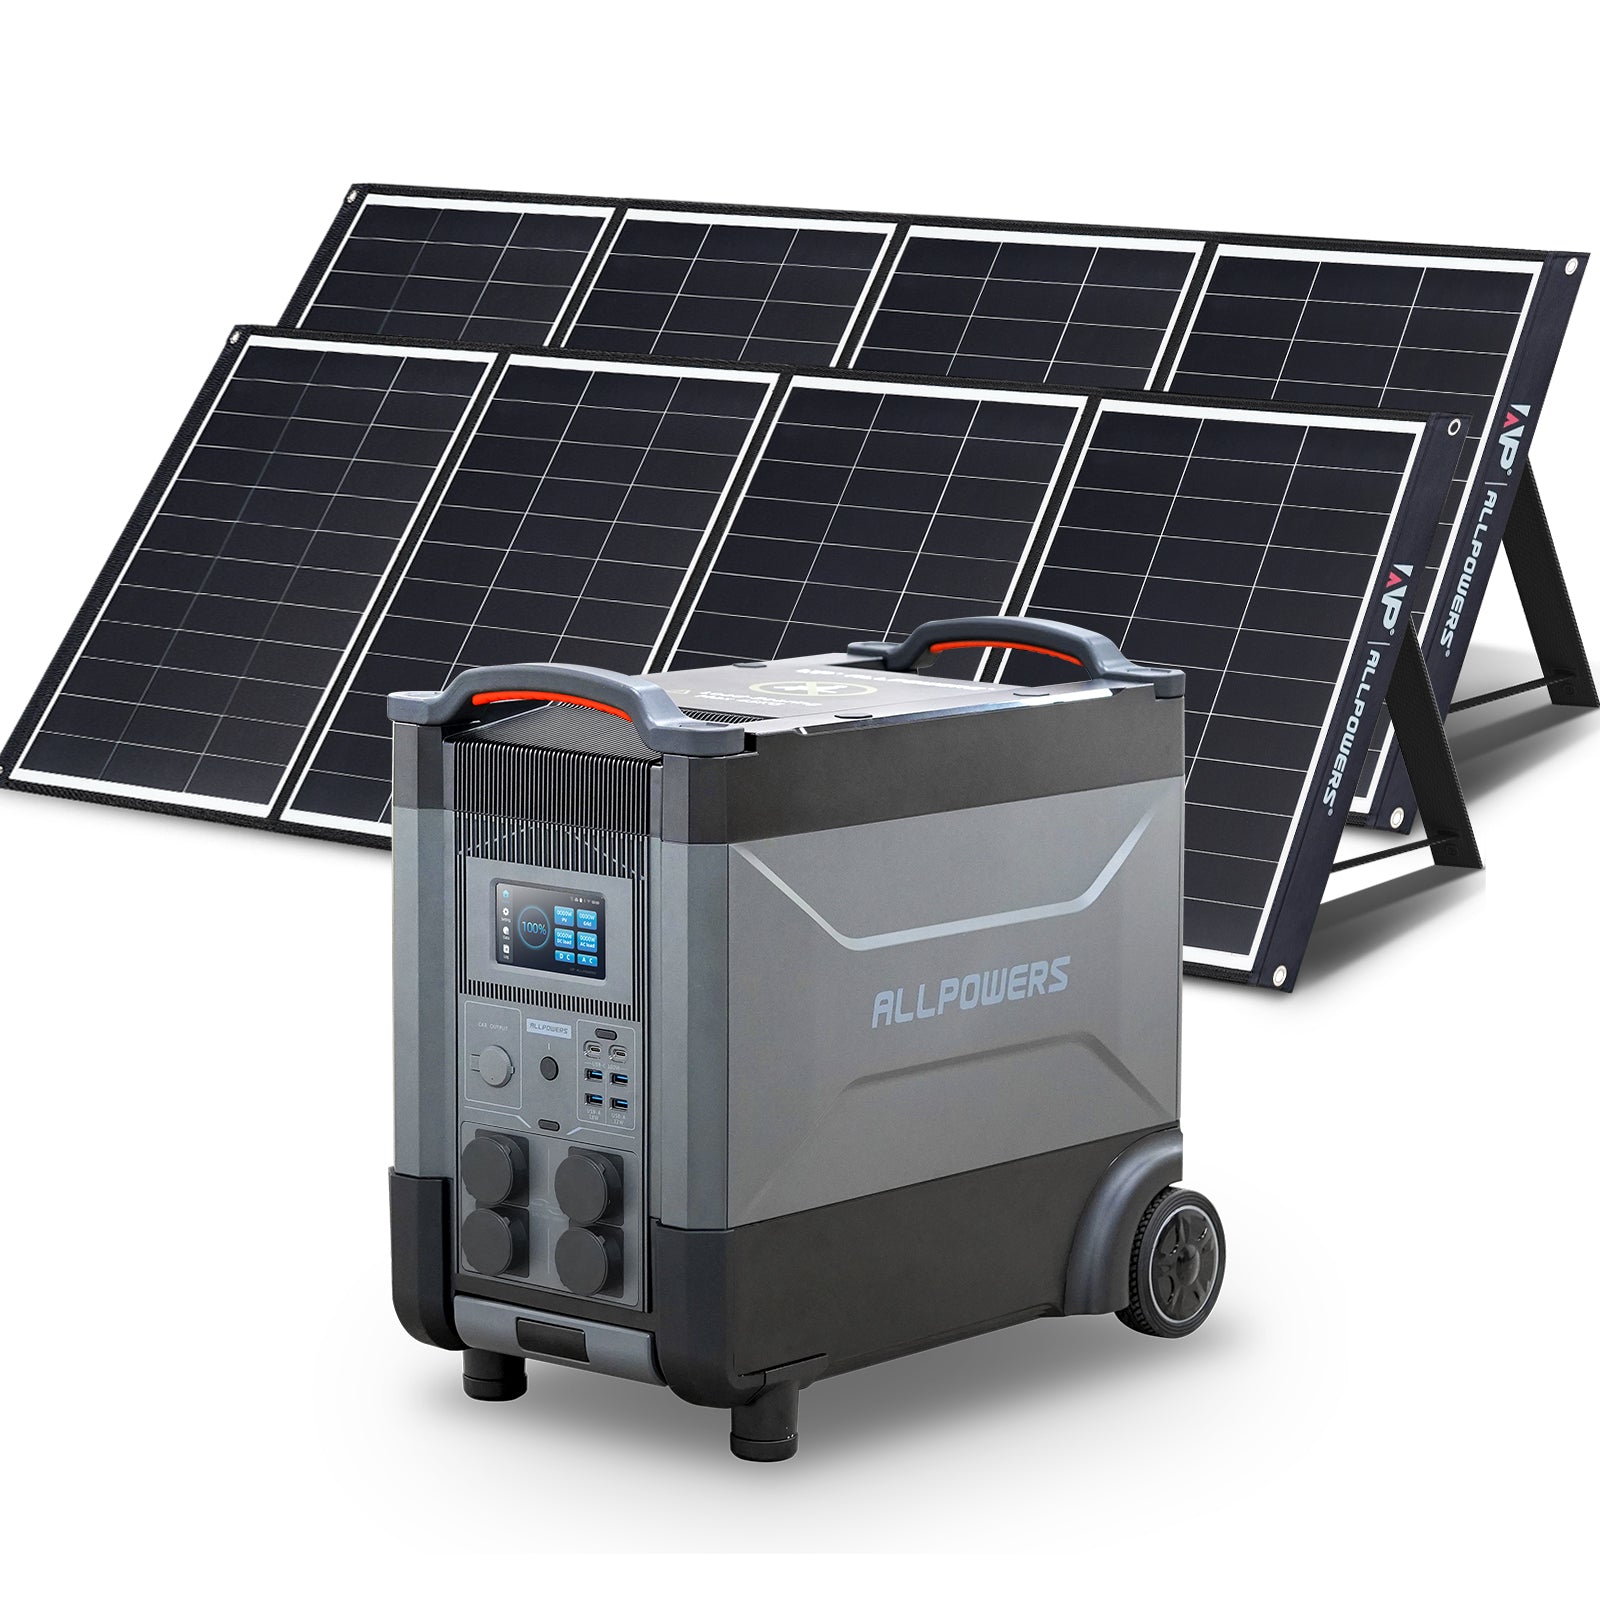 r4000-2-sp035-solar-generator-kit.jpg